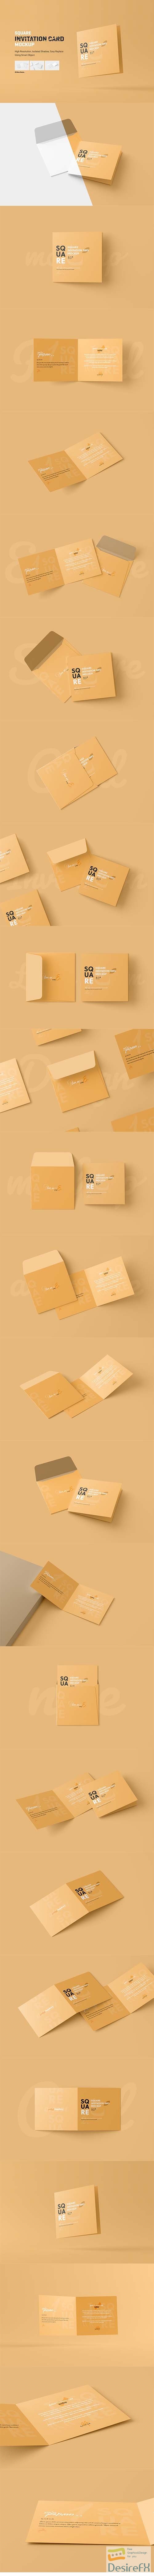 CreativeMarket - Square Folded Invitation Card Mockup 5852682